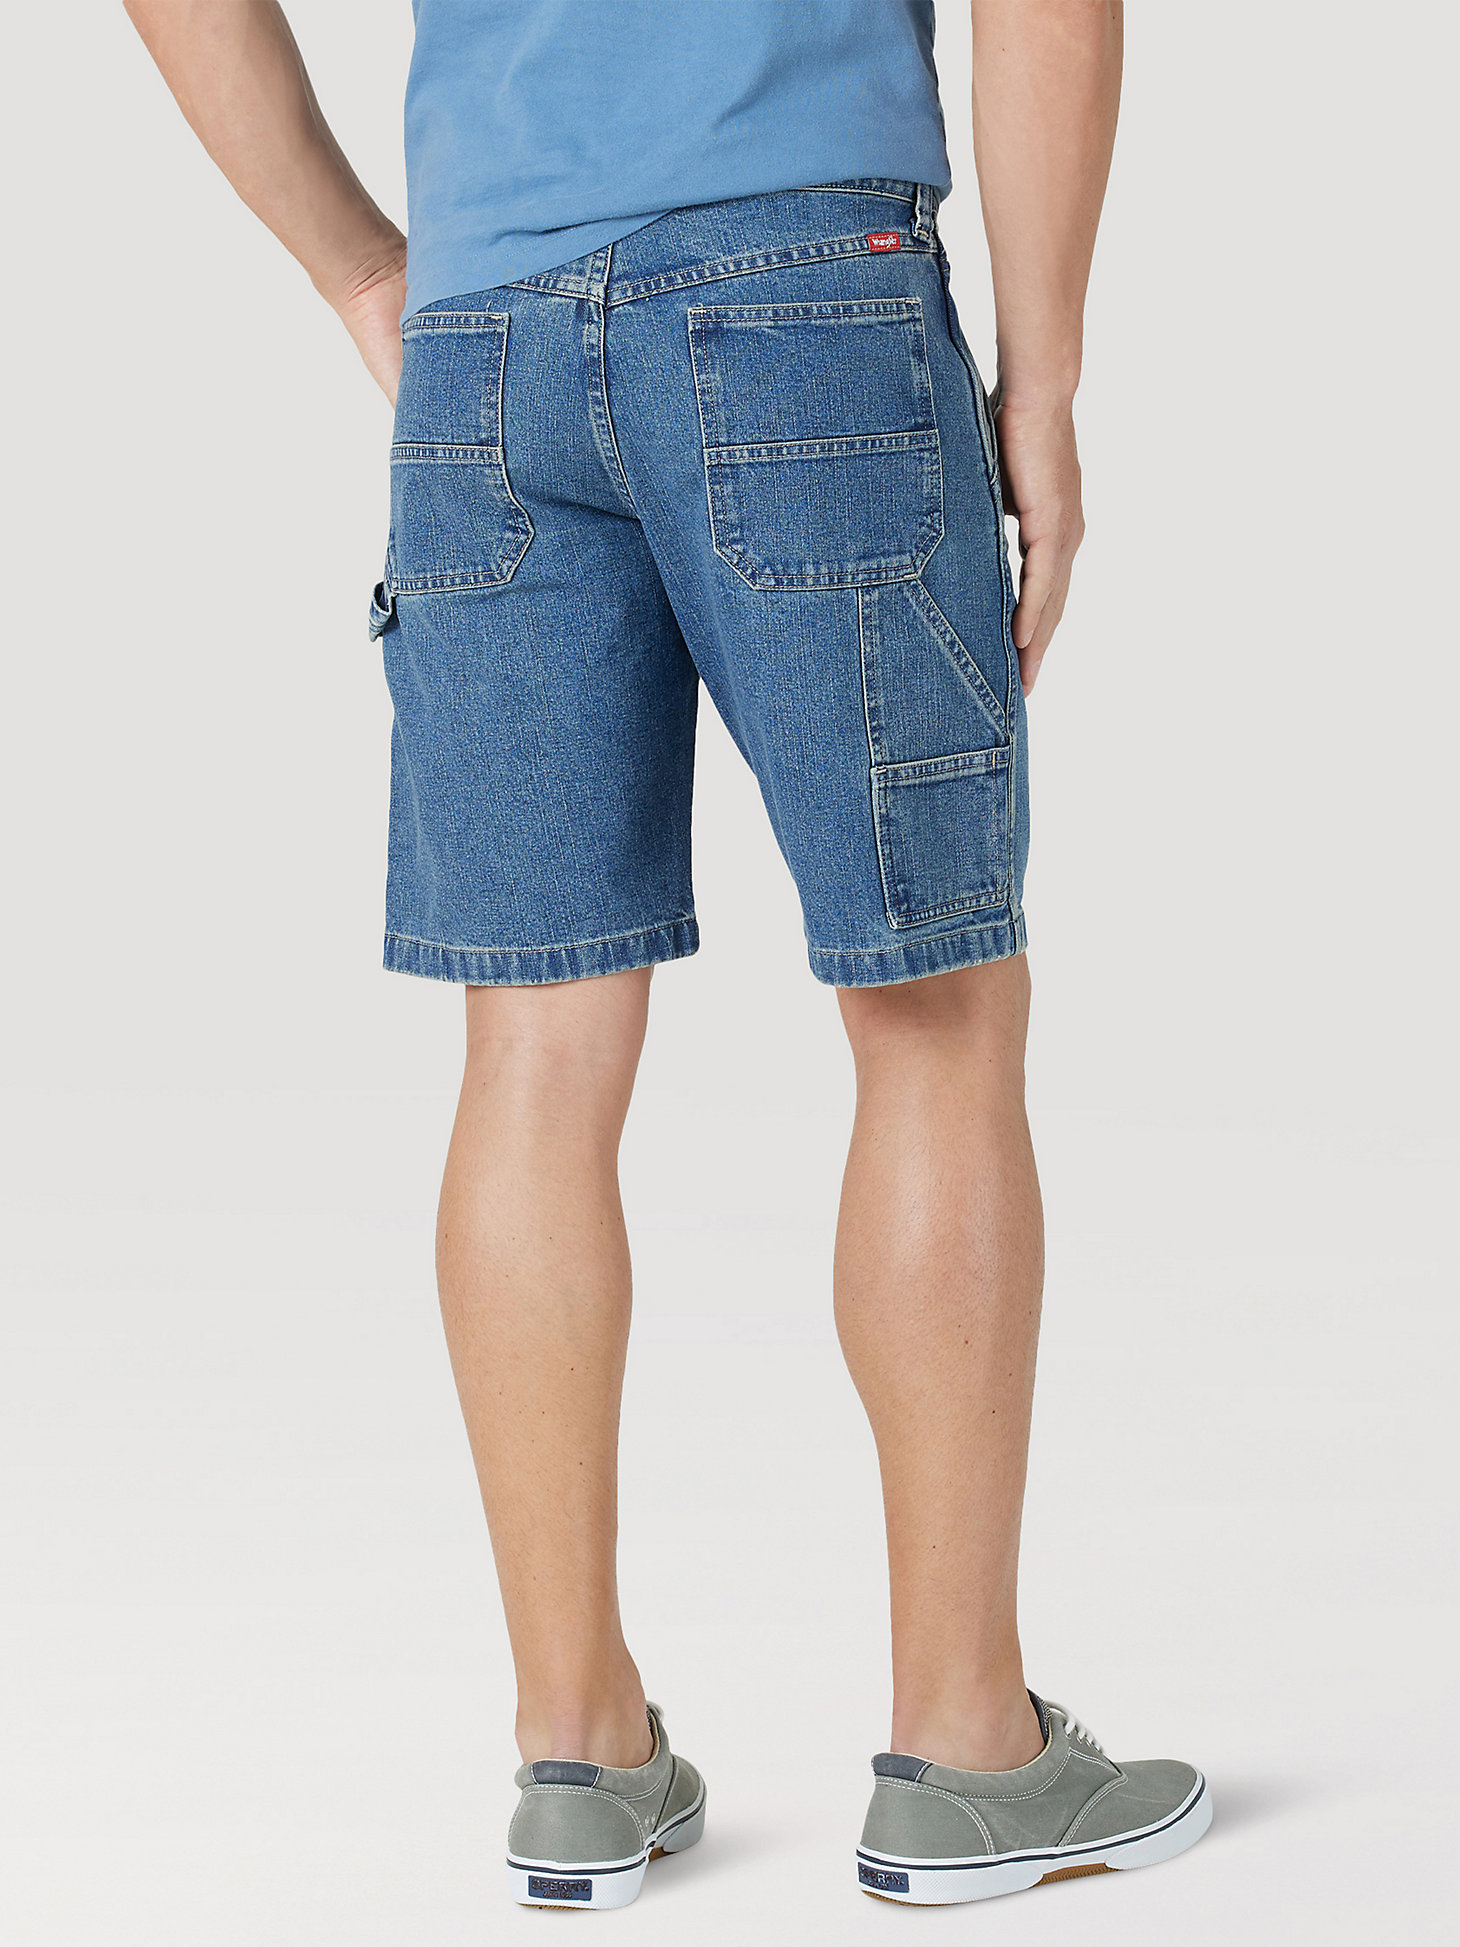 Men's Wrangler® Five Star Premium Carpenter Shorts in Vintage Tint alternative view 1